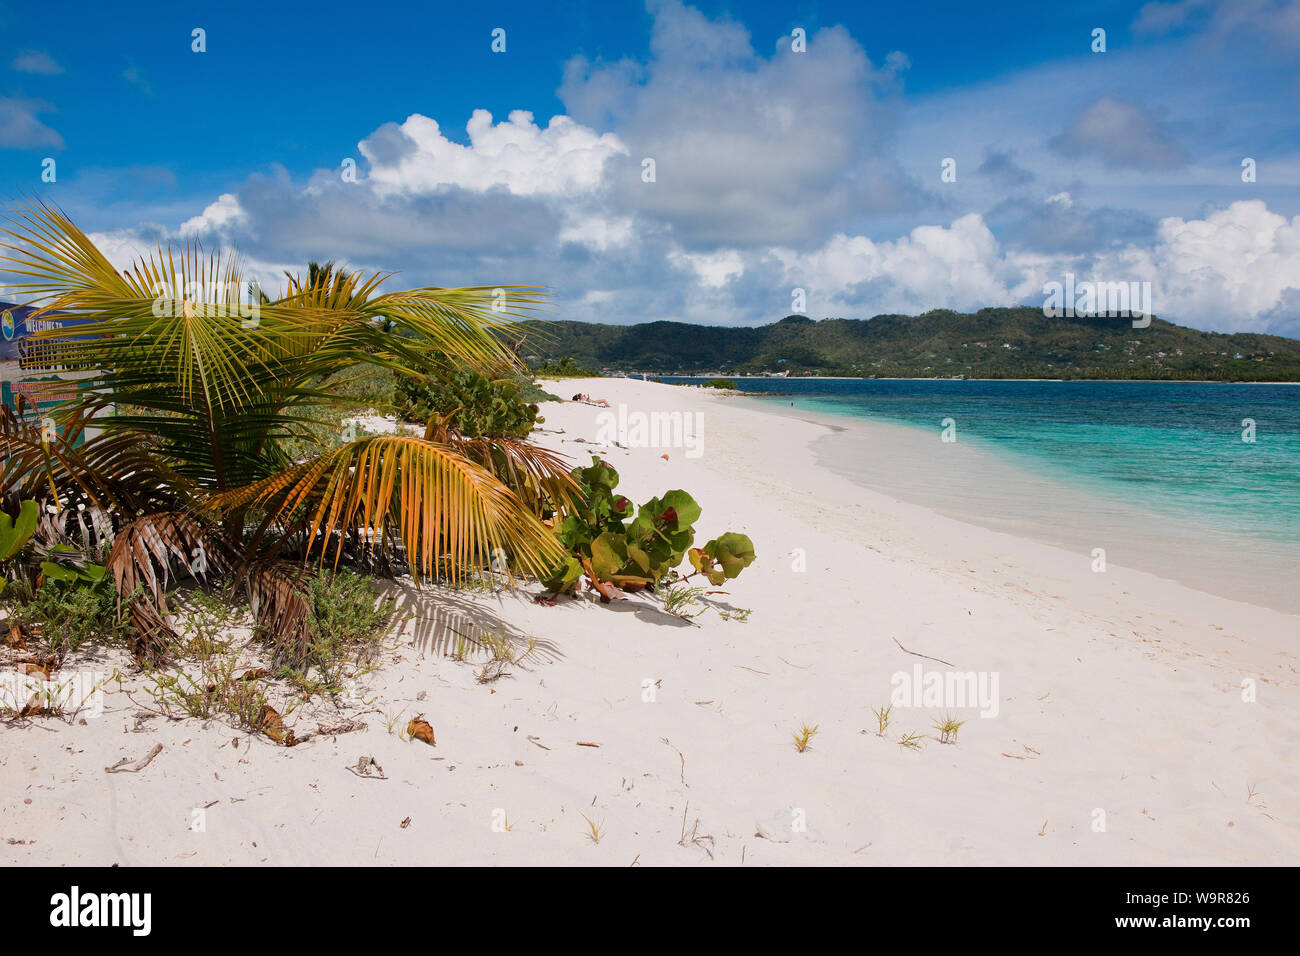 Isla de arena, cerca de la isla de Carriacou, Granada, granadinas, Caribe, América, Carriacou Foto de stock